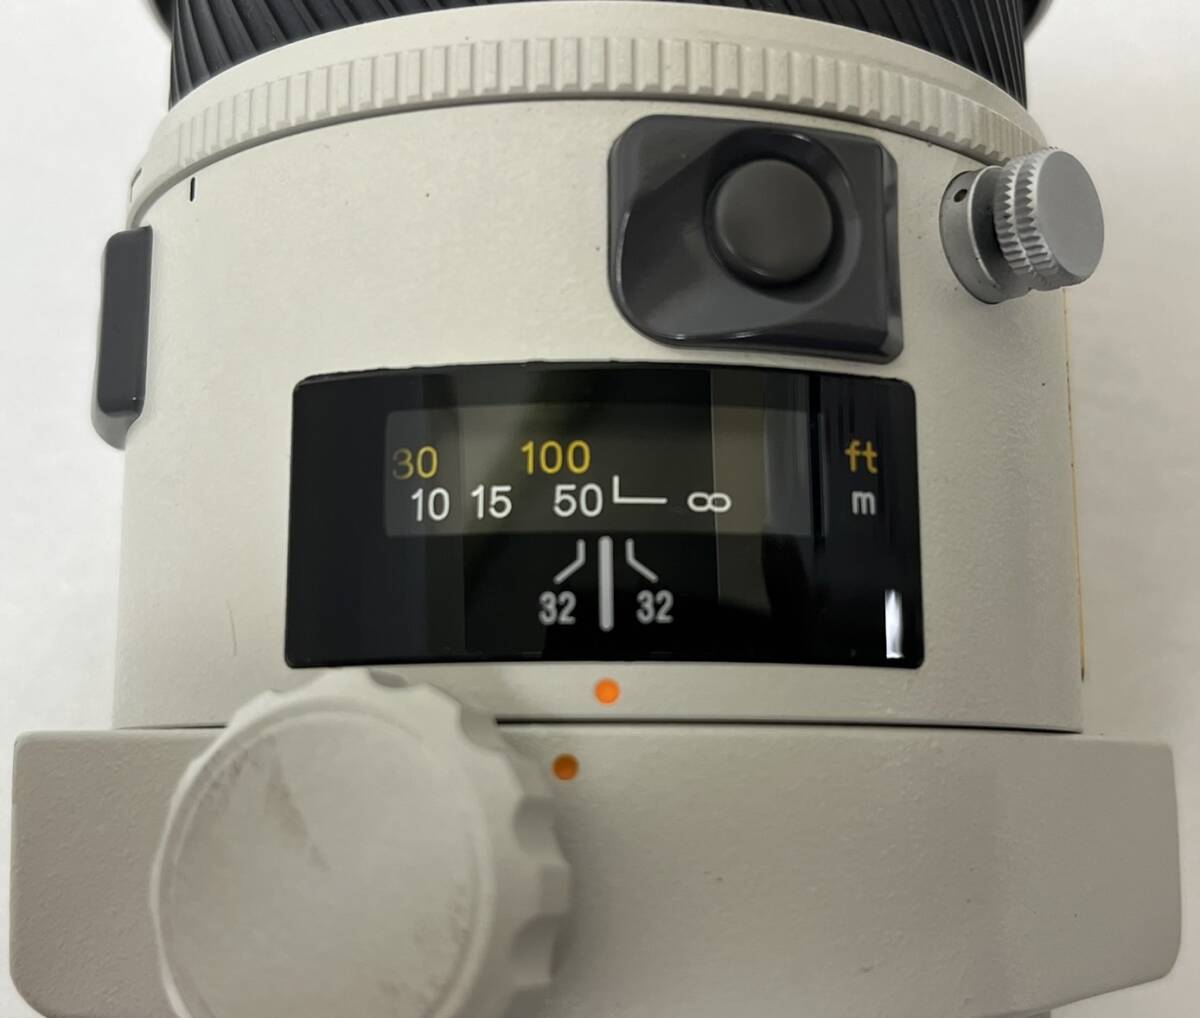 【ST18219MG】MINOLTA ミノルタ APO TELE AF 300mm F2.8 1:2.8(32) 望遠レンズ 専用ケース有 レンズ用カバー有 ※動作未確認 カメラの画像7